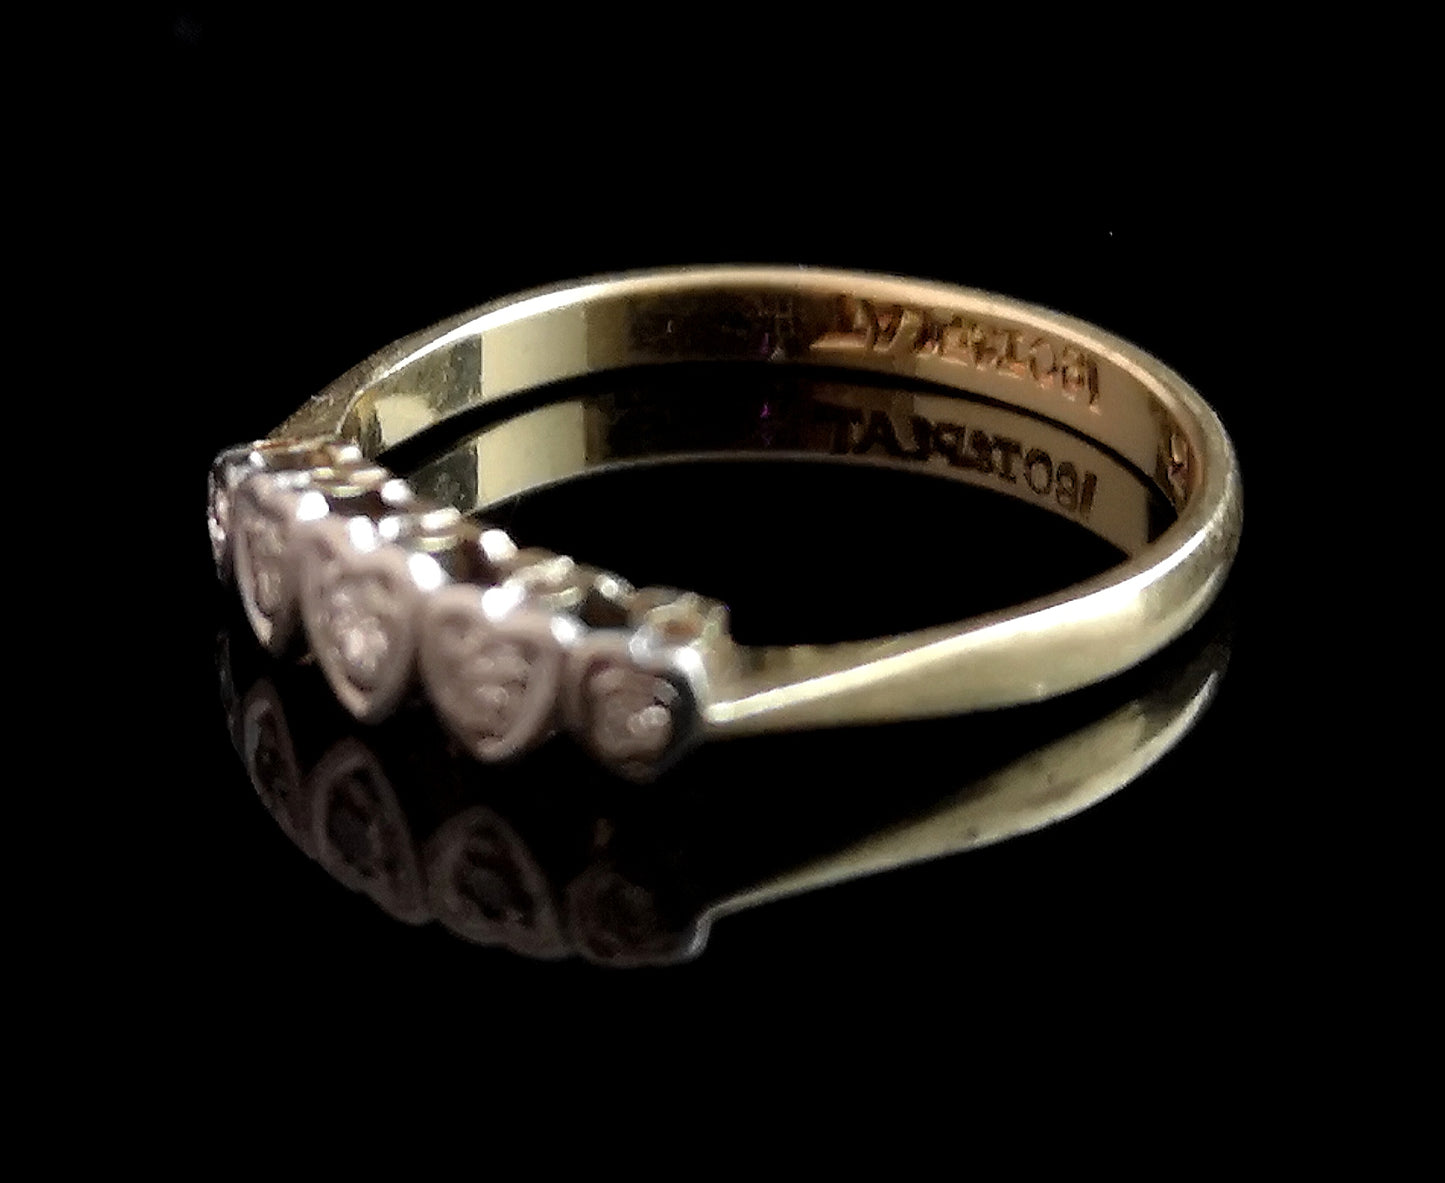 Vintage Art Deco diamond heart ring, 18ct gold and platinum